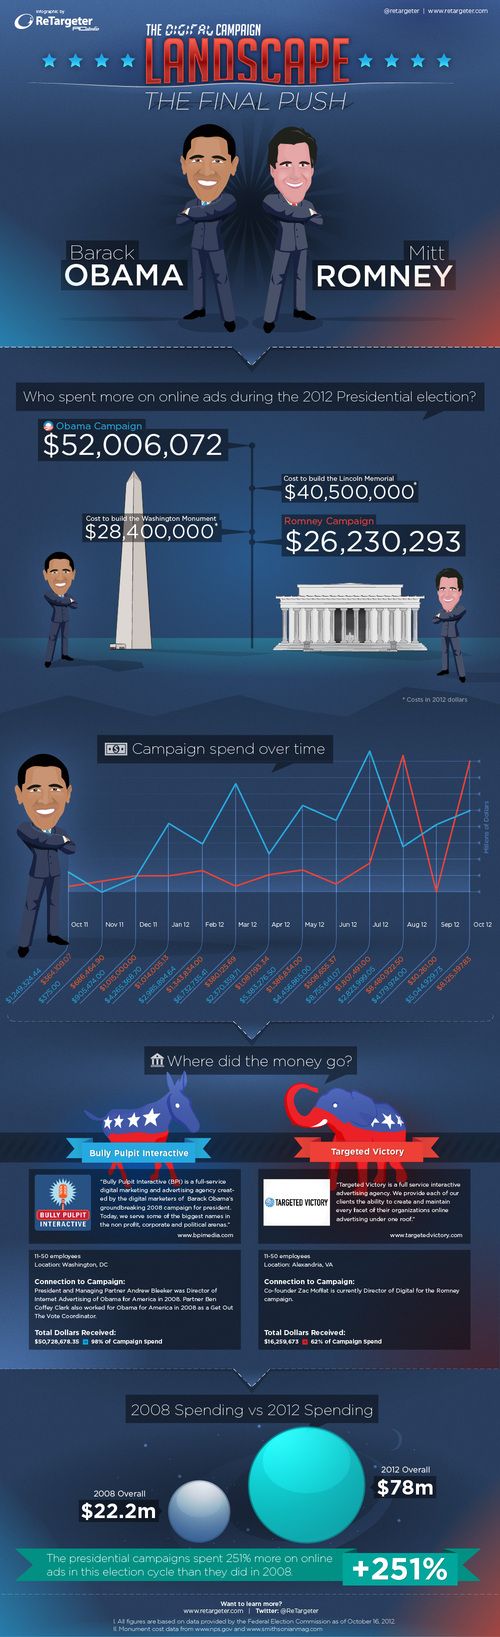 Digital_Campaign_FInal_Push_Infographic_Nov2012.jpg